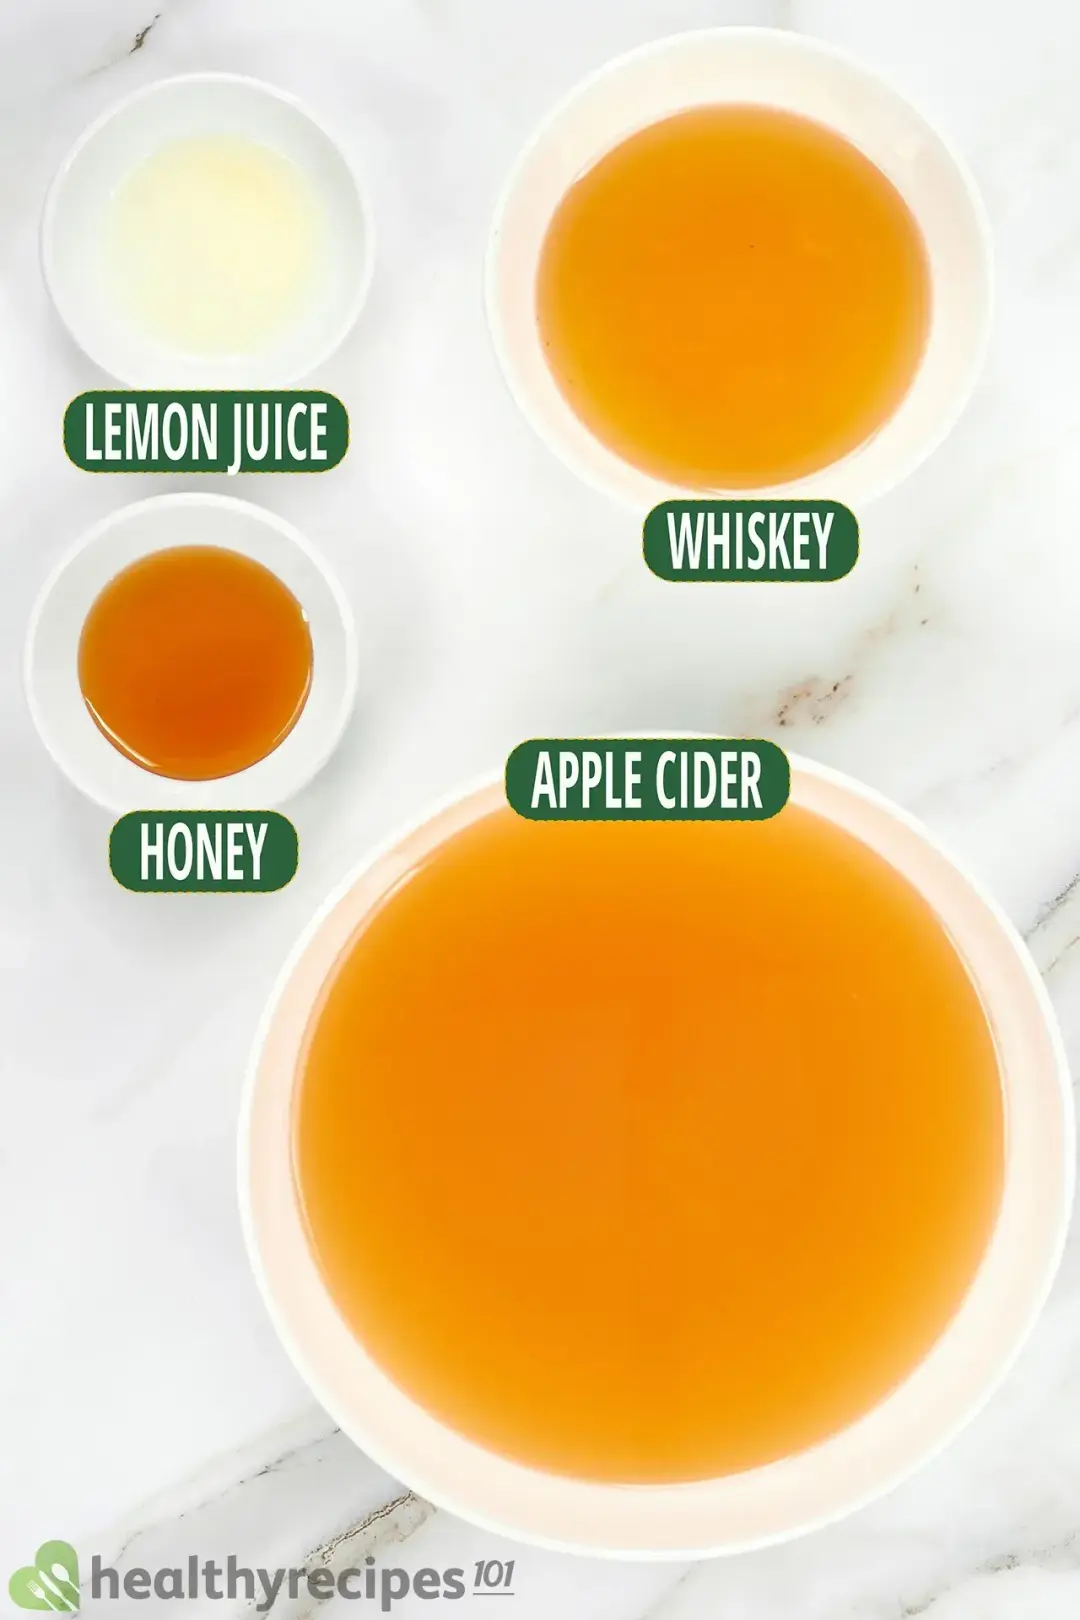 Ingredients in separate bowls: aplpe cider, whiskey, lemon juice, and honey